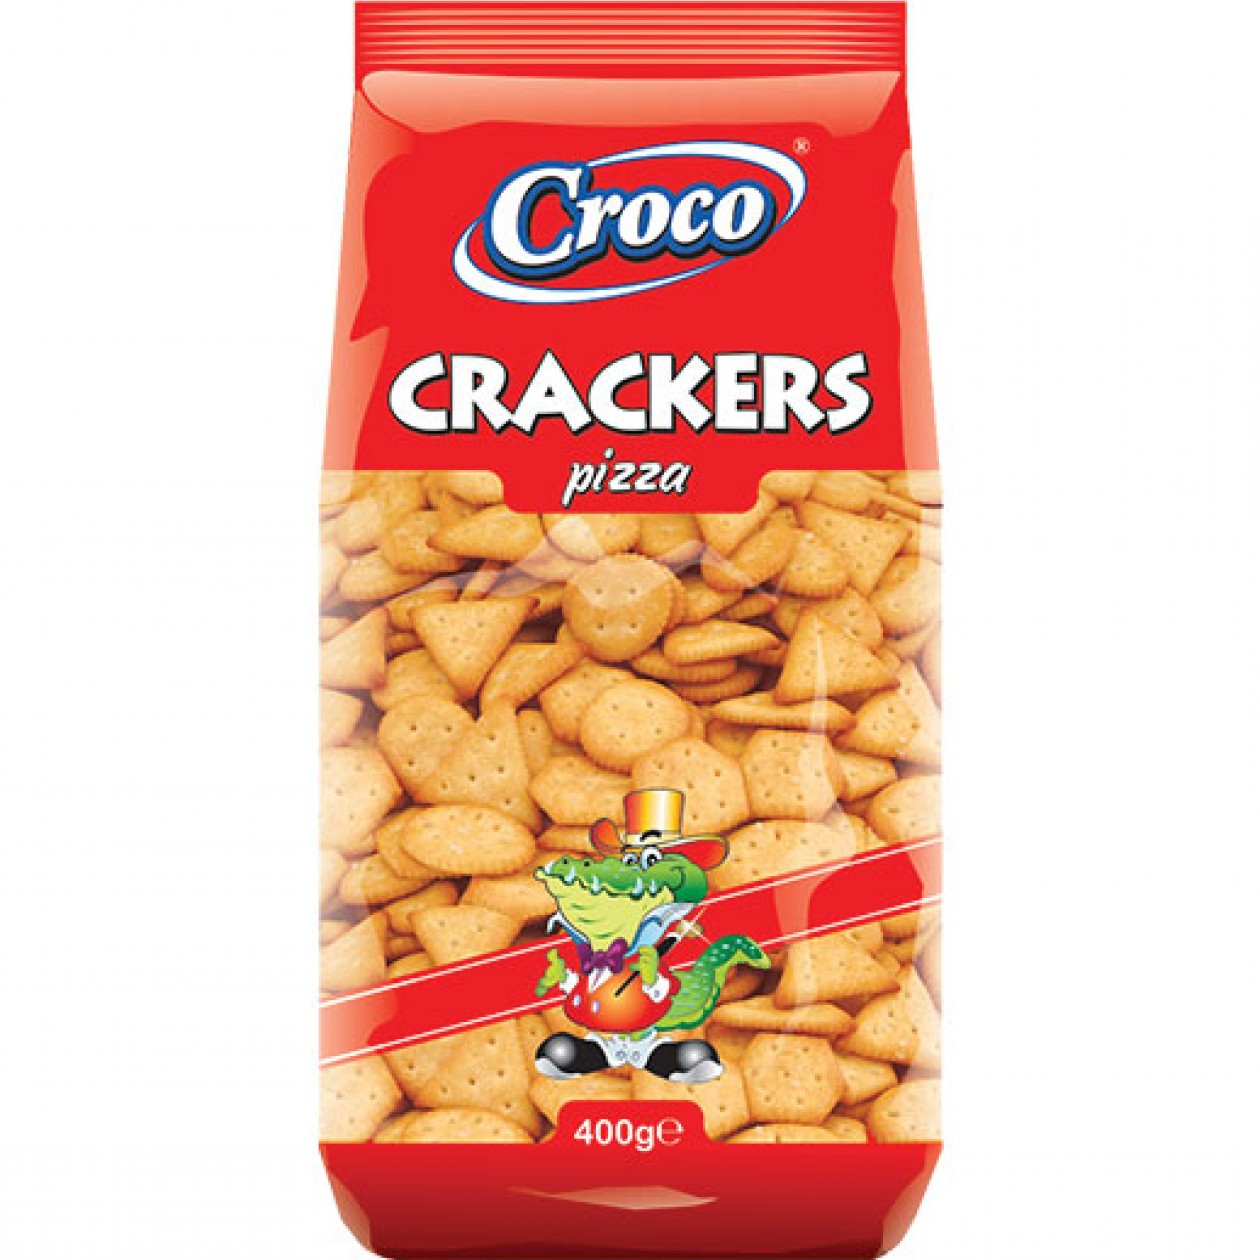 Croco Crackers Pizza Flavour 400g